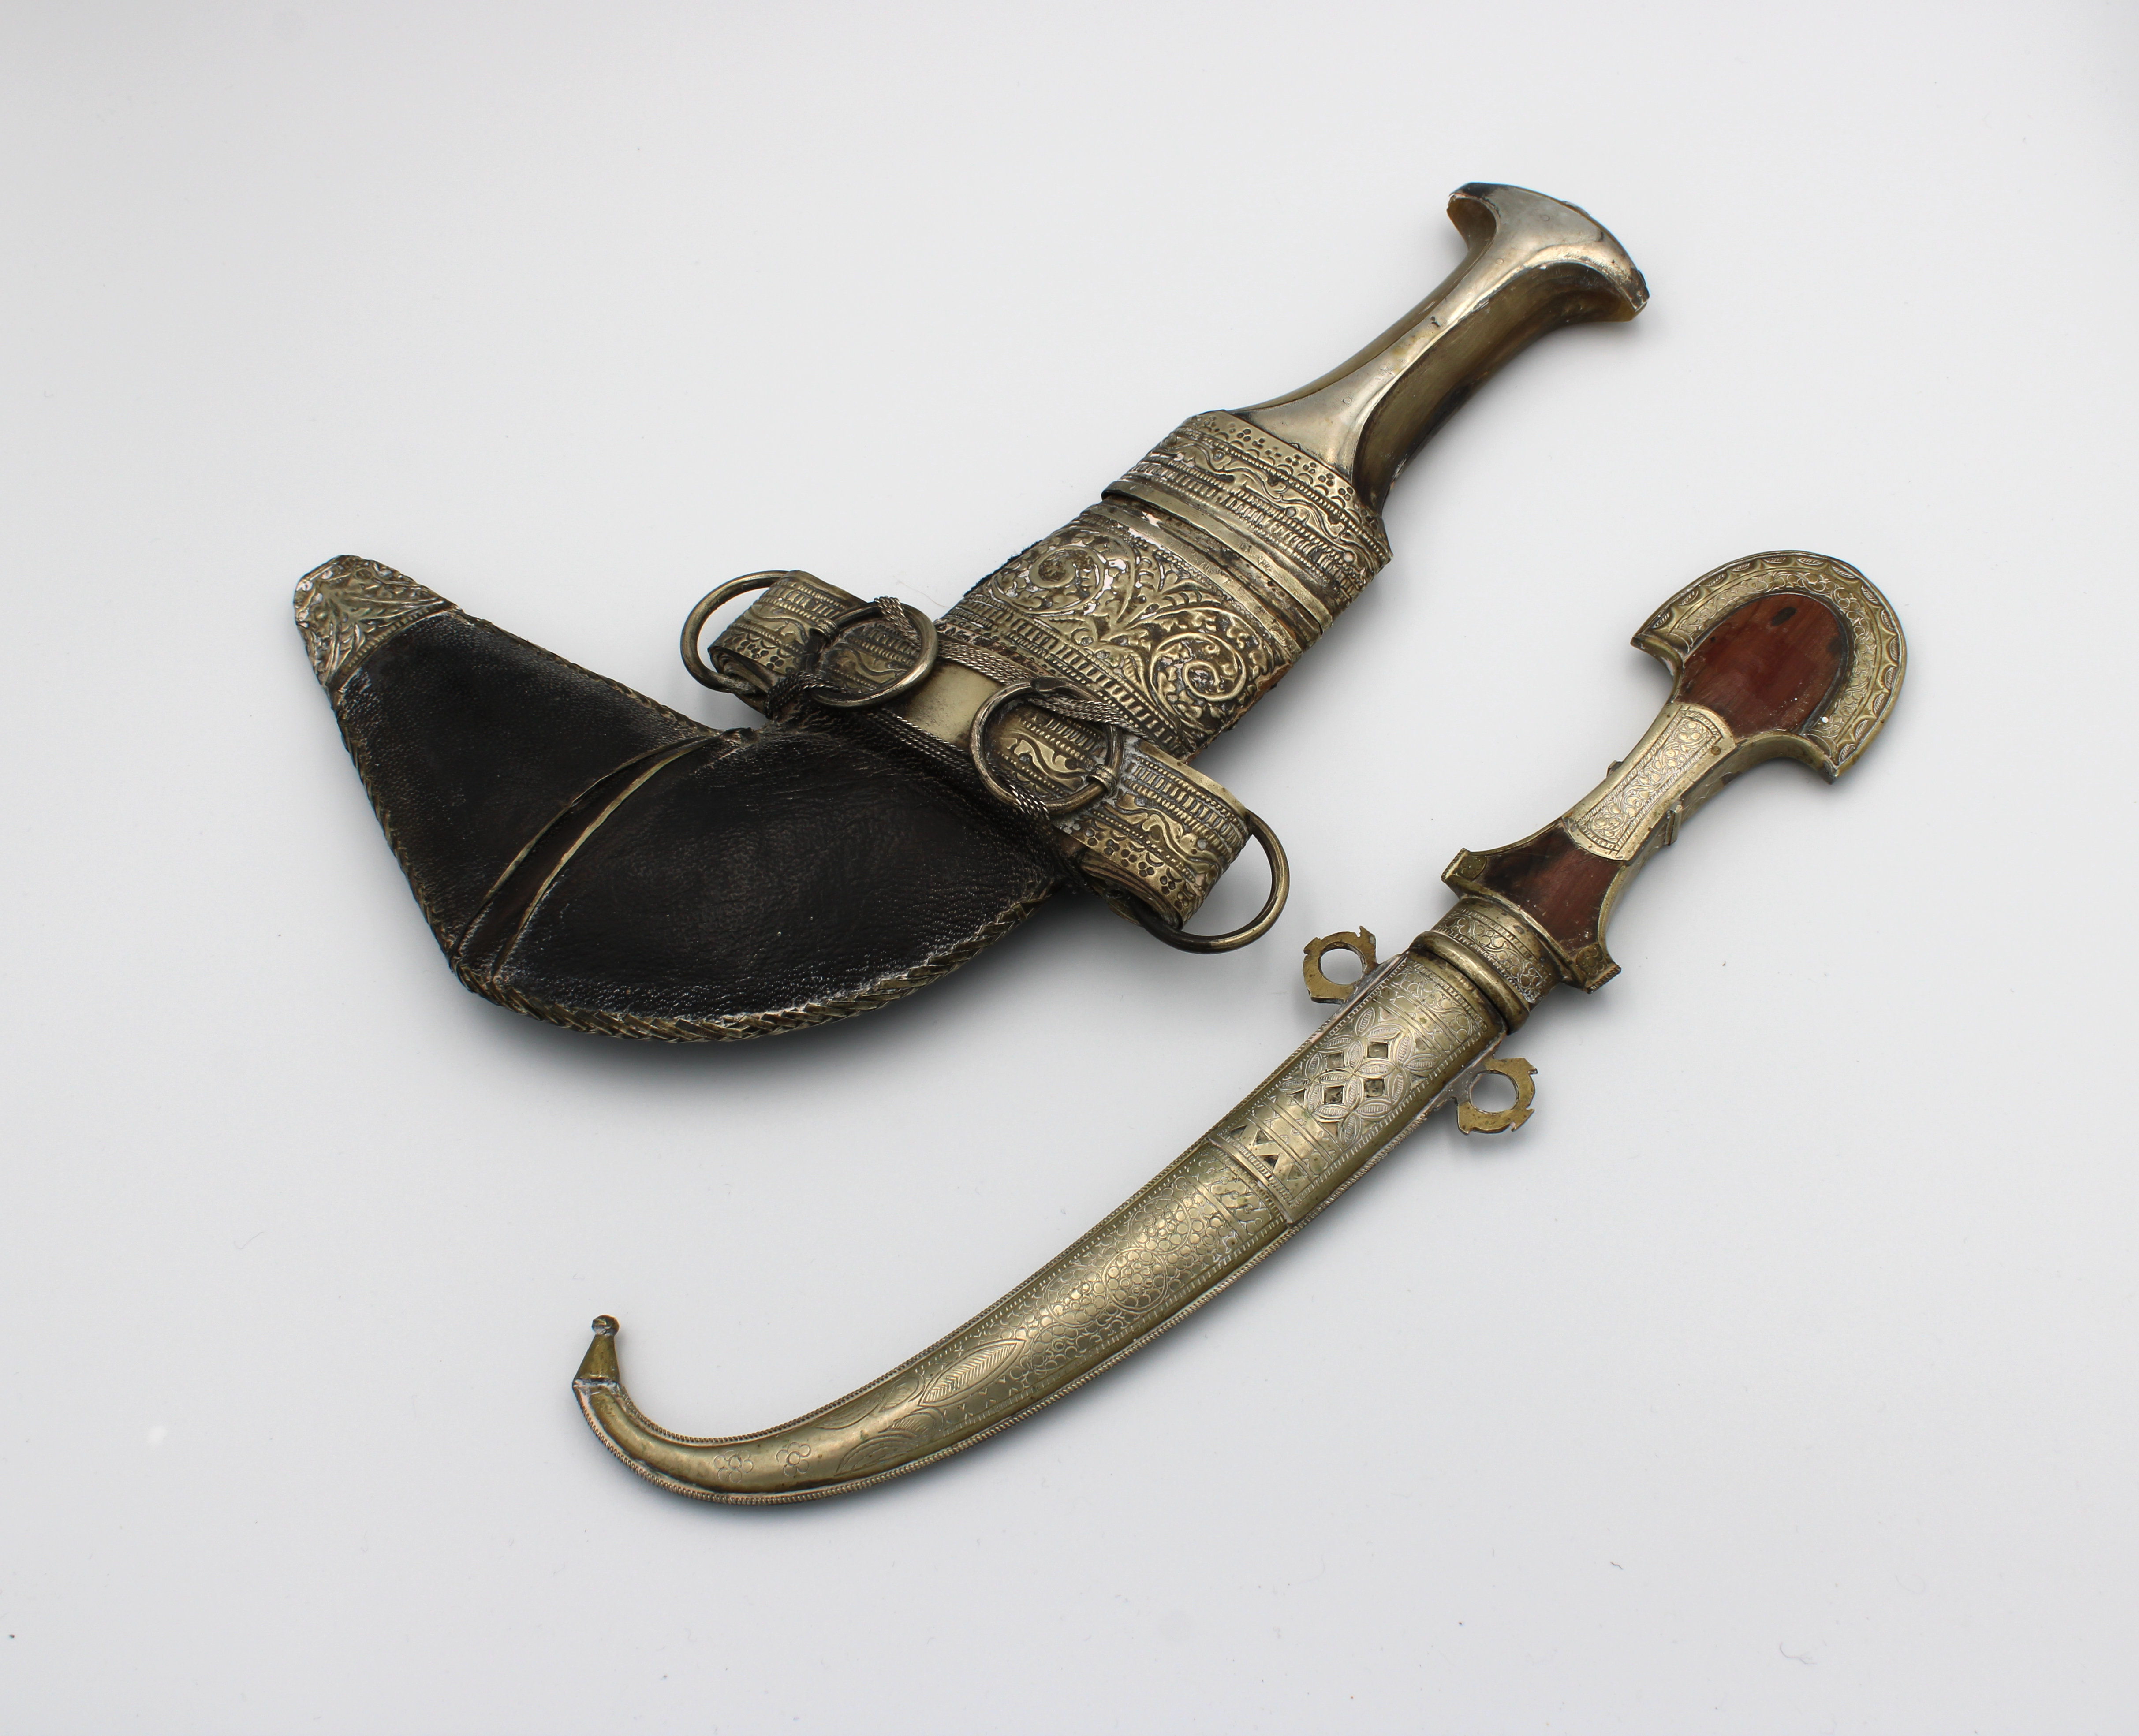 A Bahraini silver Jambiya dagger with a shaped horned handle